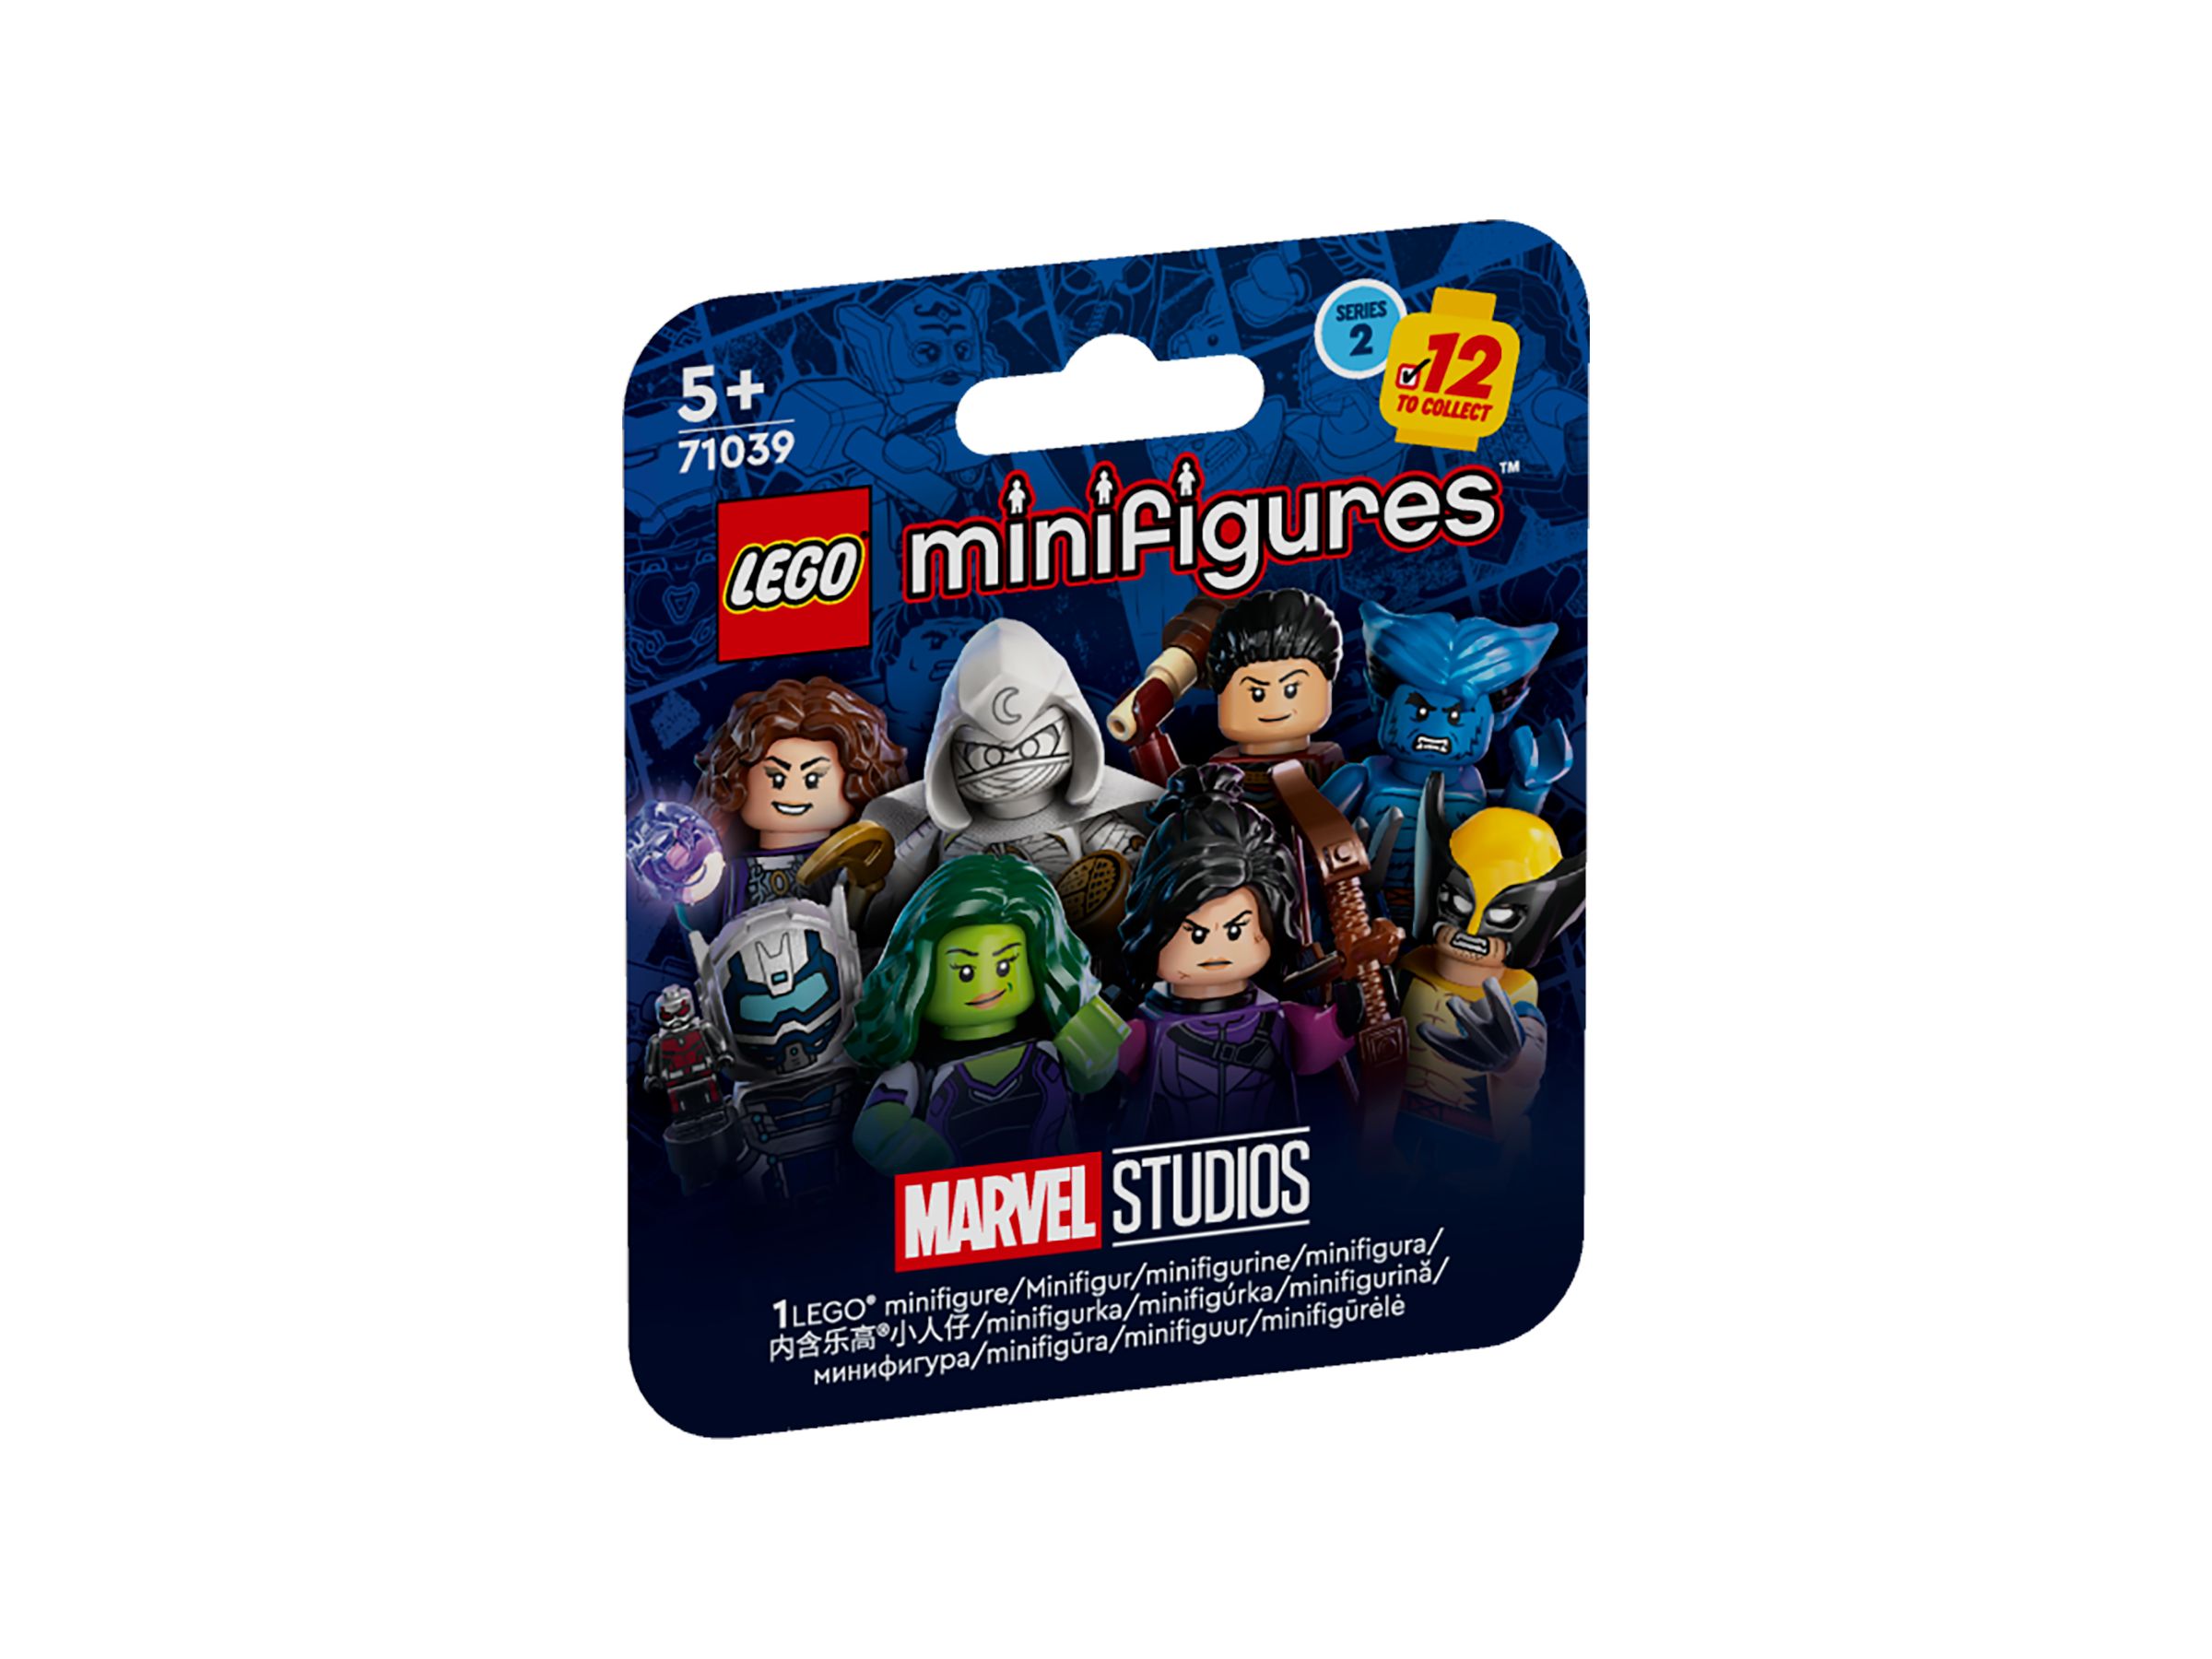 LEGO Collectable Minifigures 71039 Marvel Minifiguren Serie 2 LEGO_71039_box1_v111.jpg